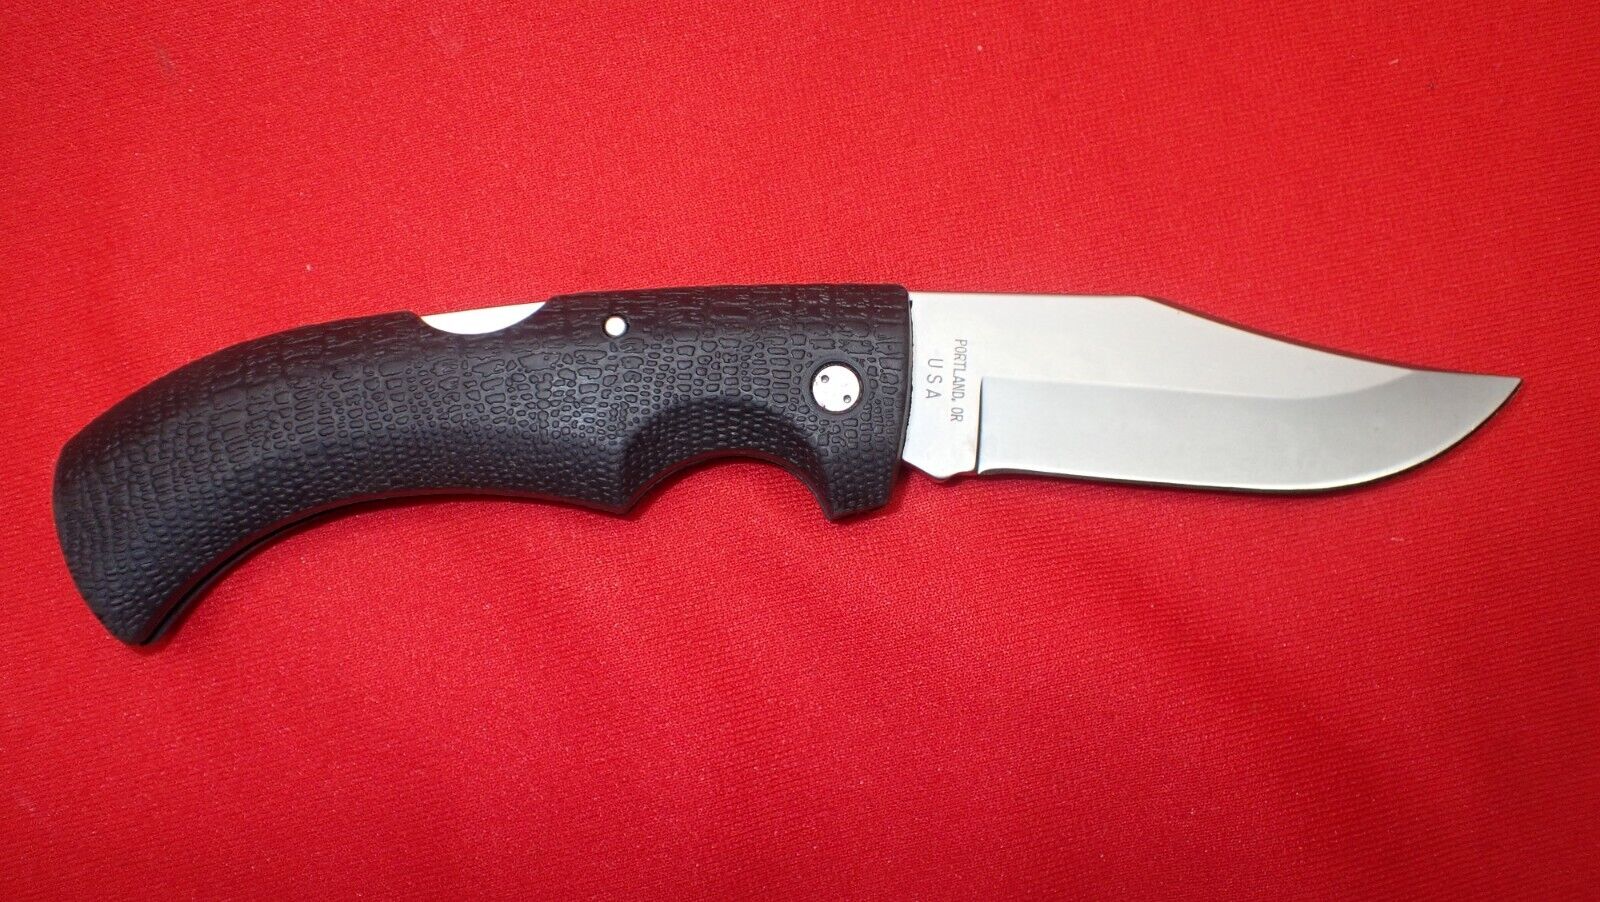 Gerber 650 Folding Knife Locking Portland OR. USA Gerber 650 Folding